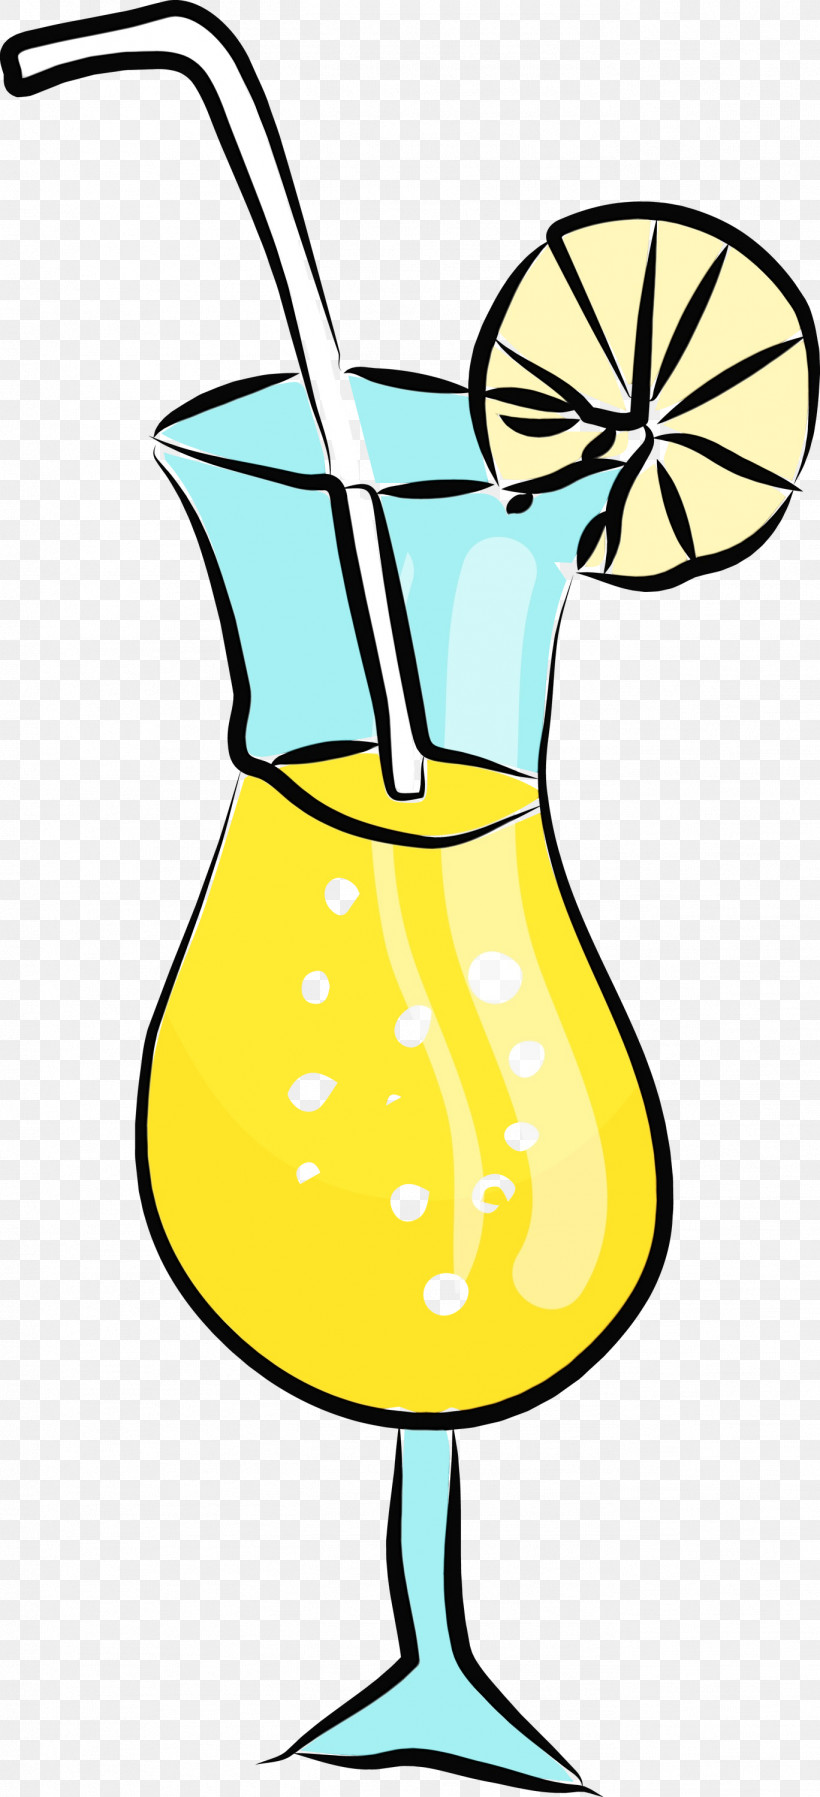 Yellow Hurricane Drink Lemon Non-alcoholic Beverage, PNG, 1368x2999px, Drink, Hurricane, Lemon, Nonalcoholic Beverage, Paint Download Free